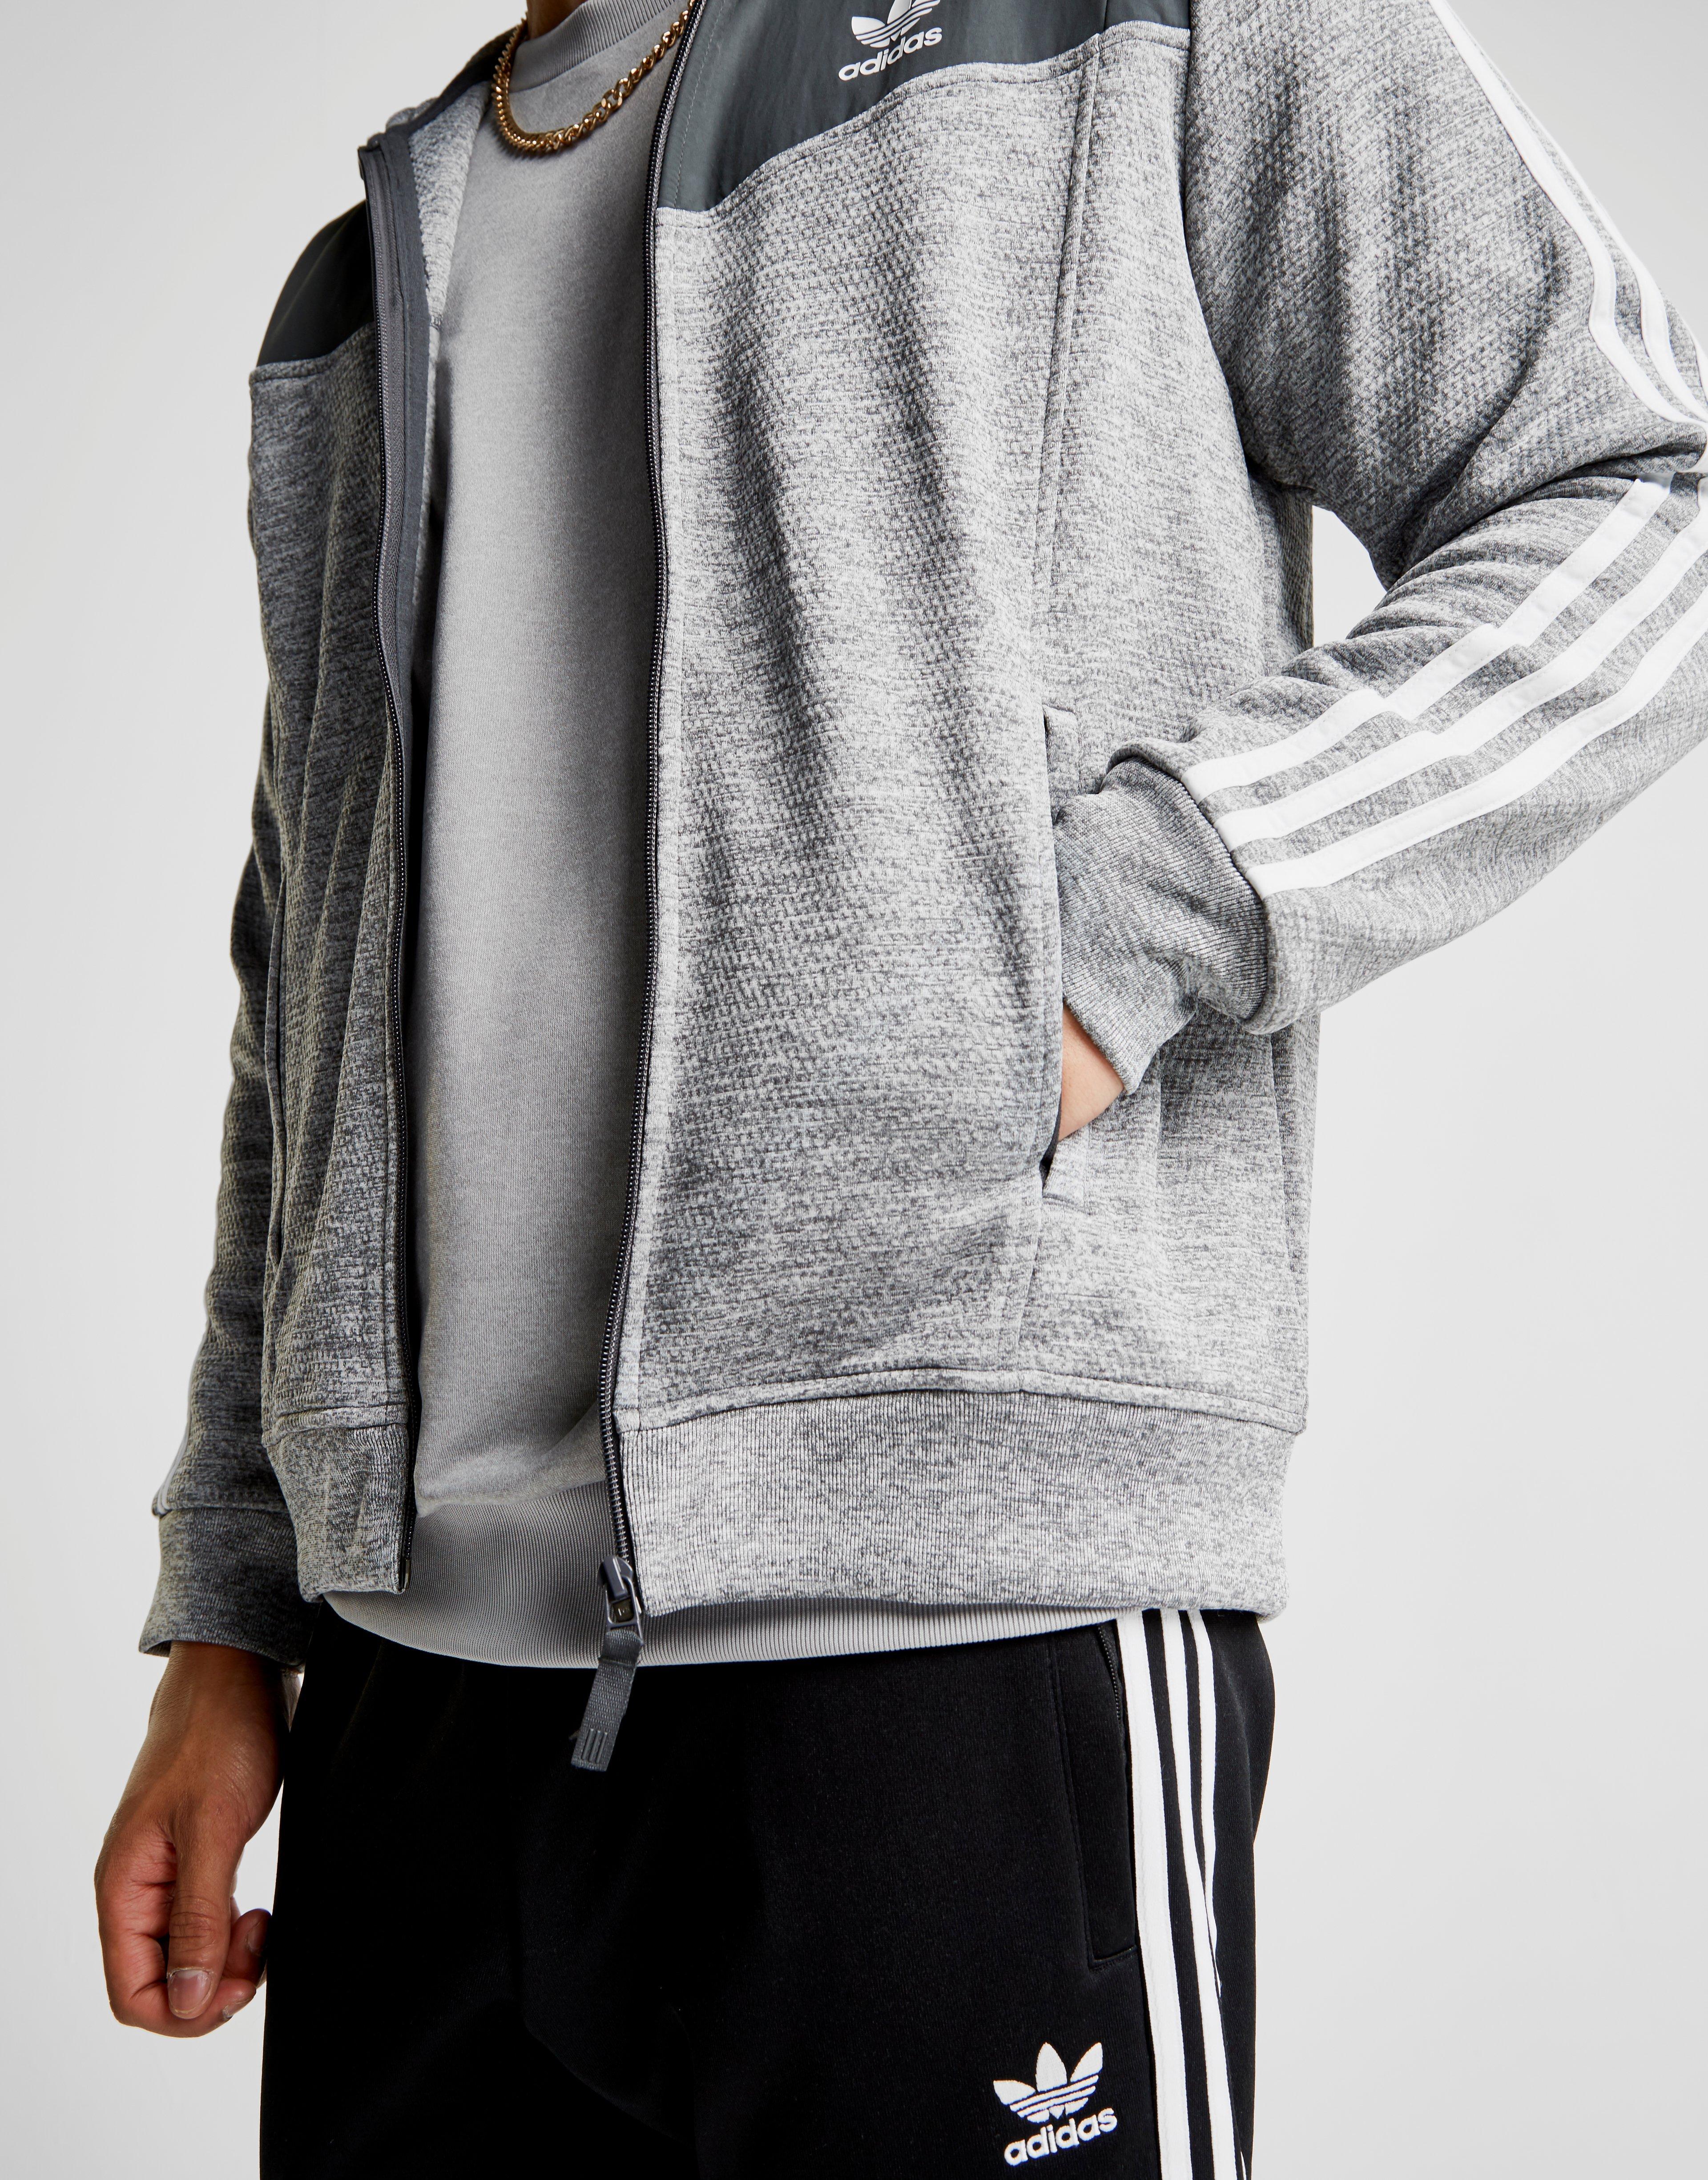 adidas Originals Synthetic Nova Woven Hoodie in Grey (Gray) for Men - Lyst